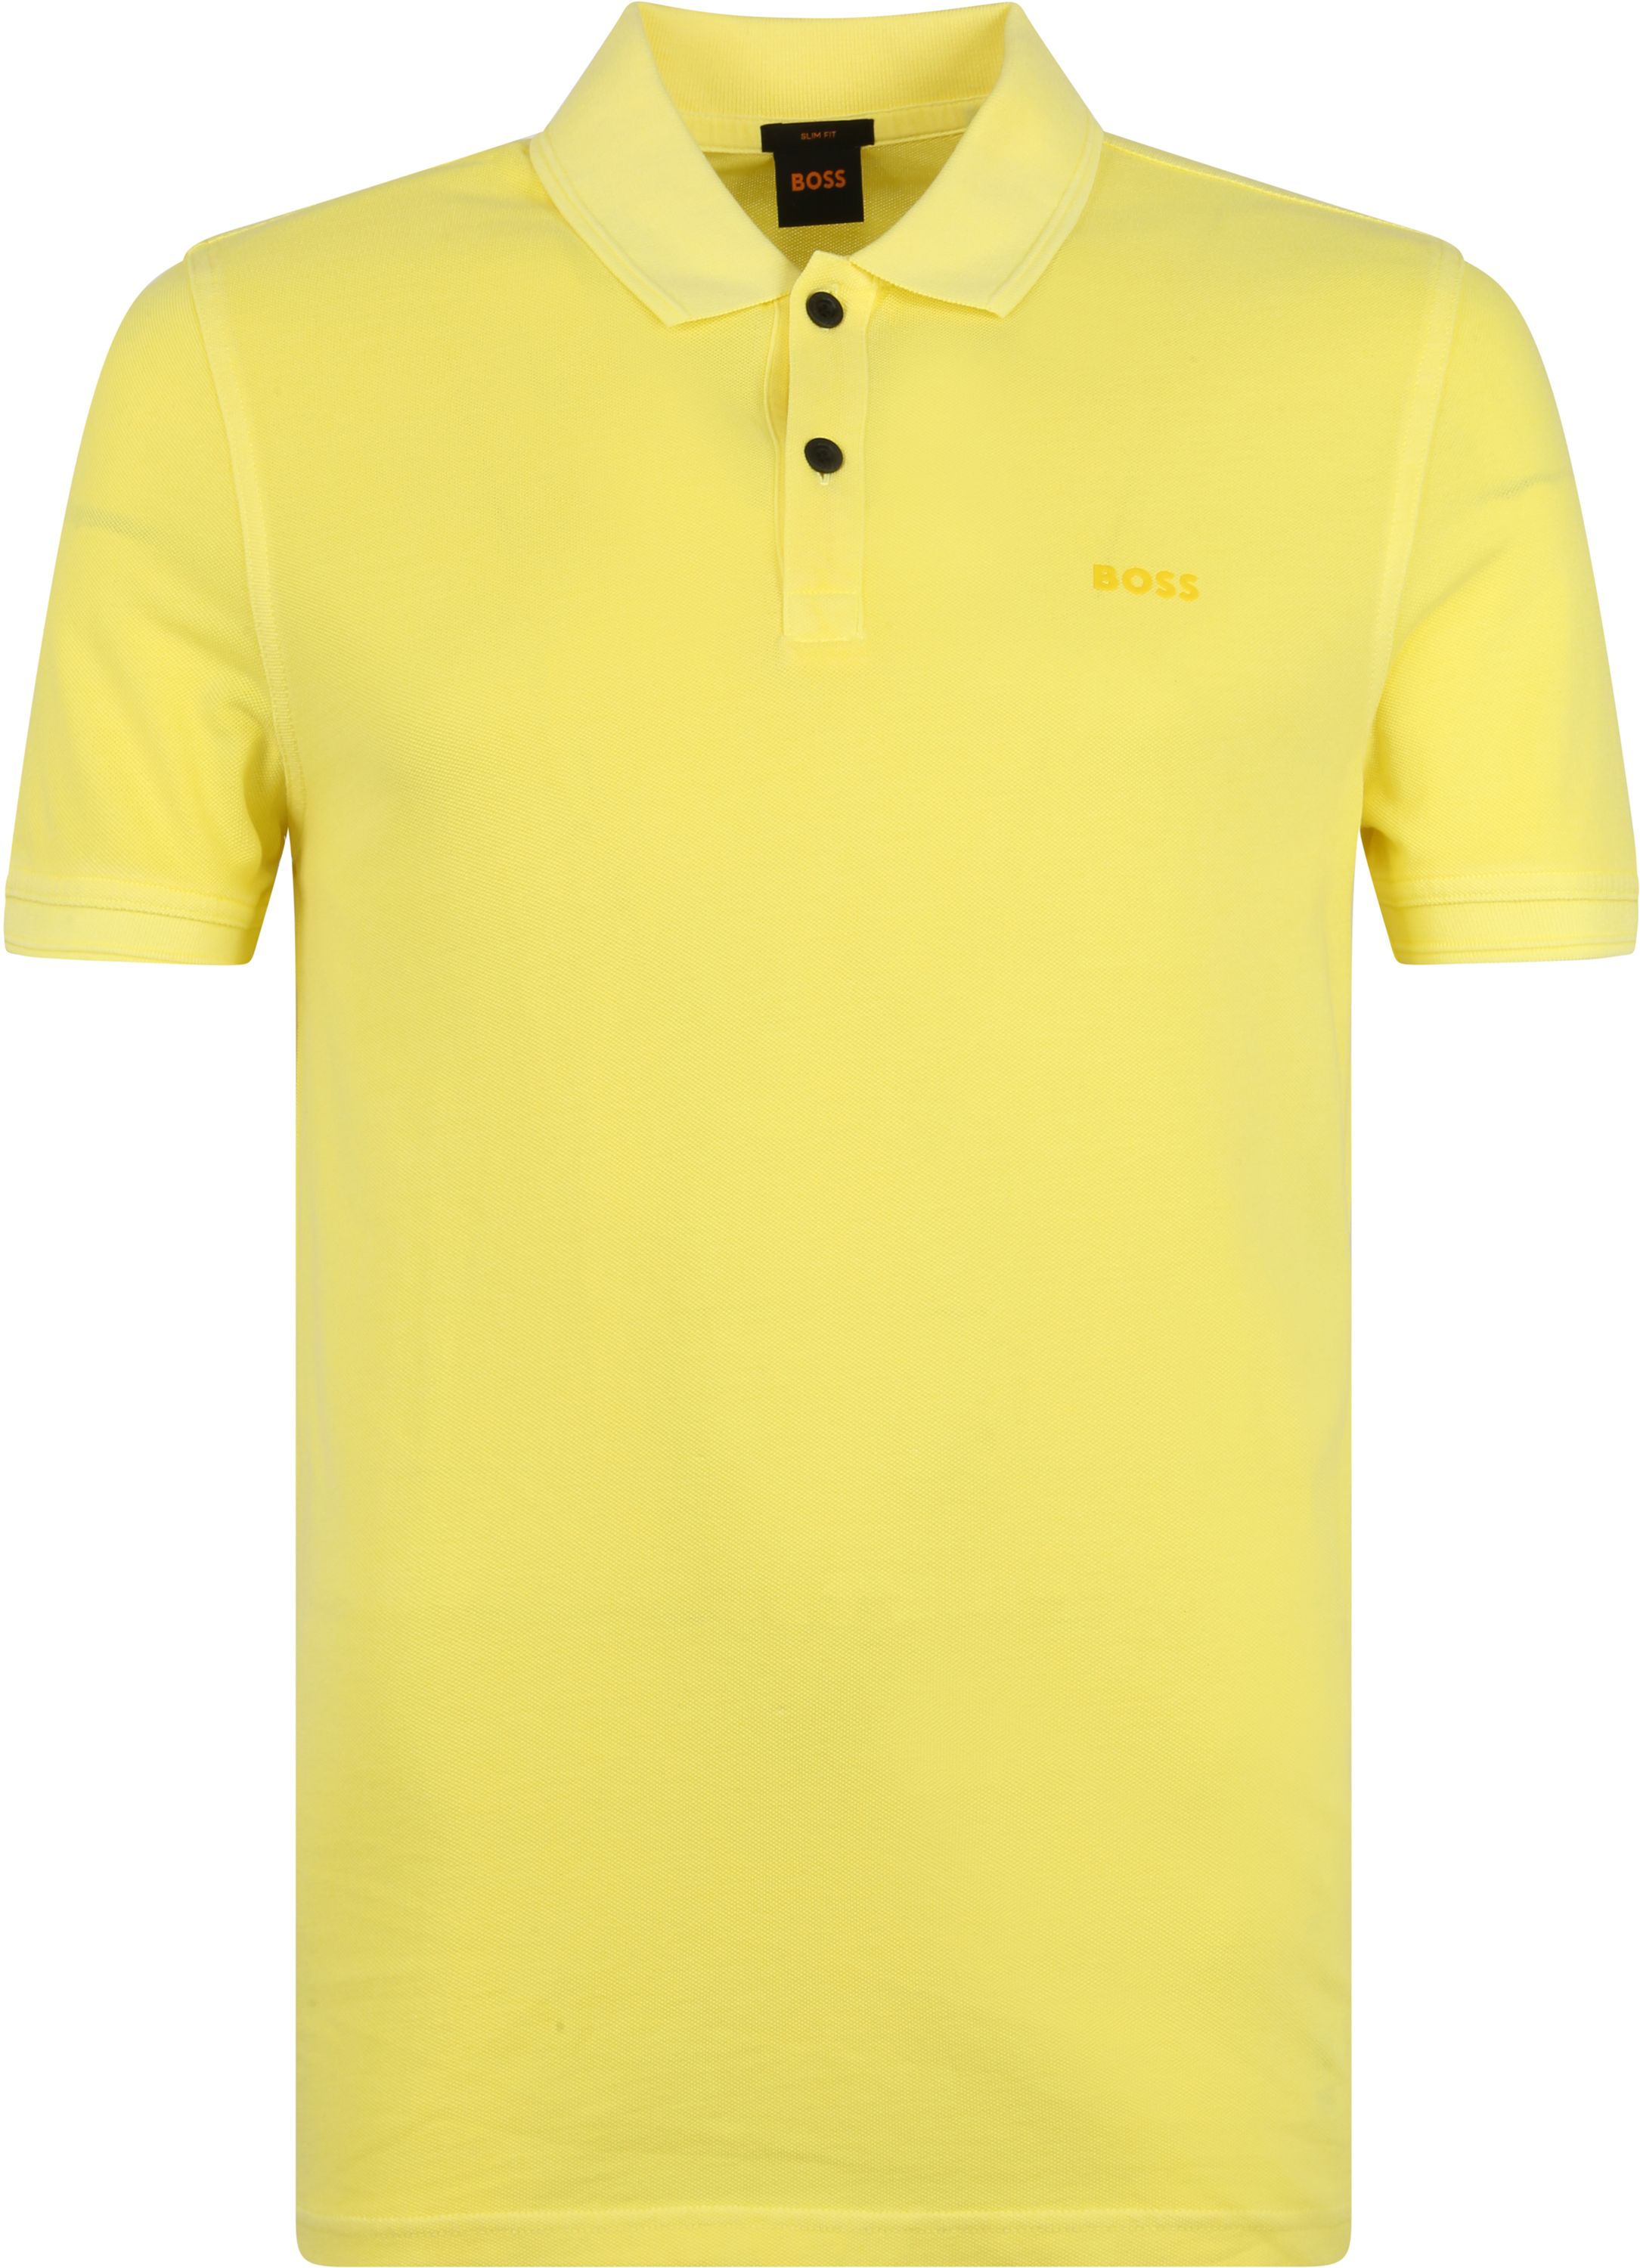 Hugo Boss Polo Shirt Yellow size 3XL